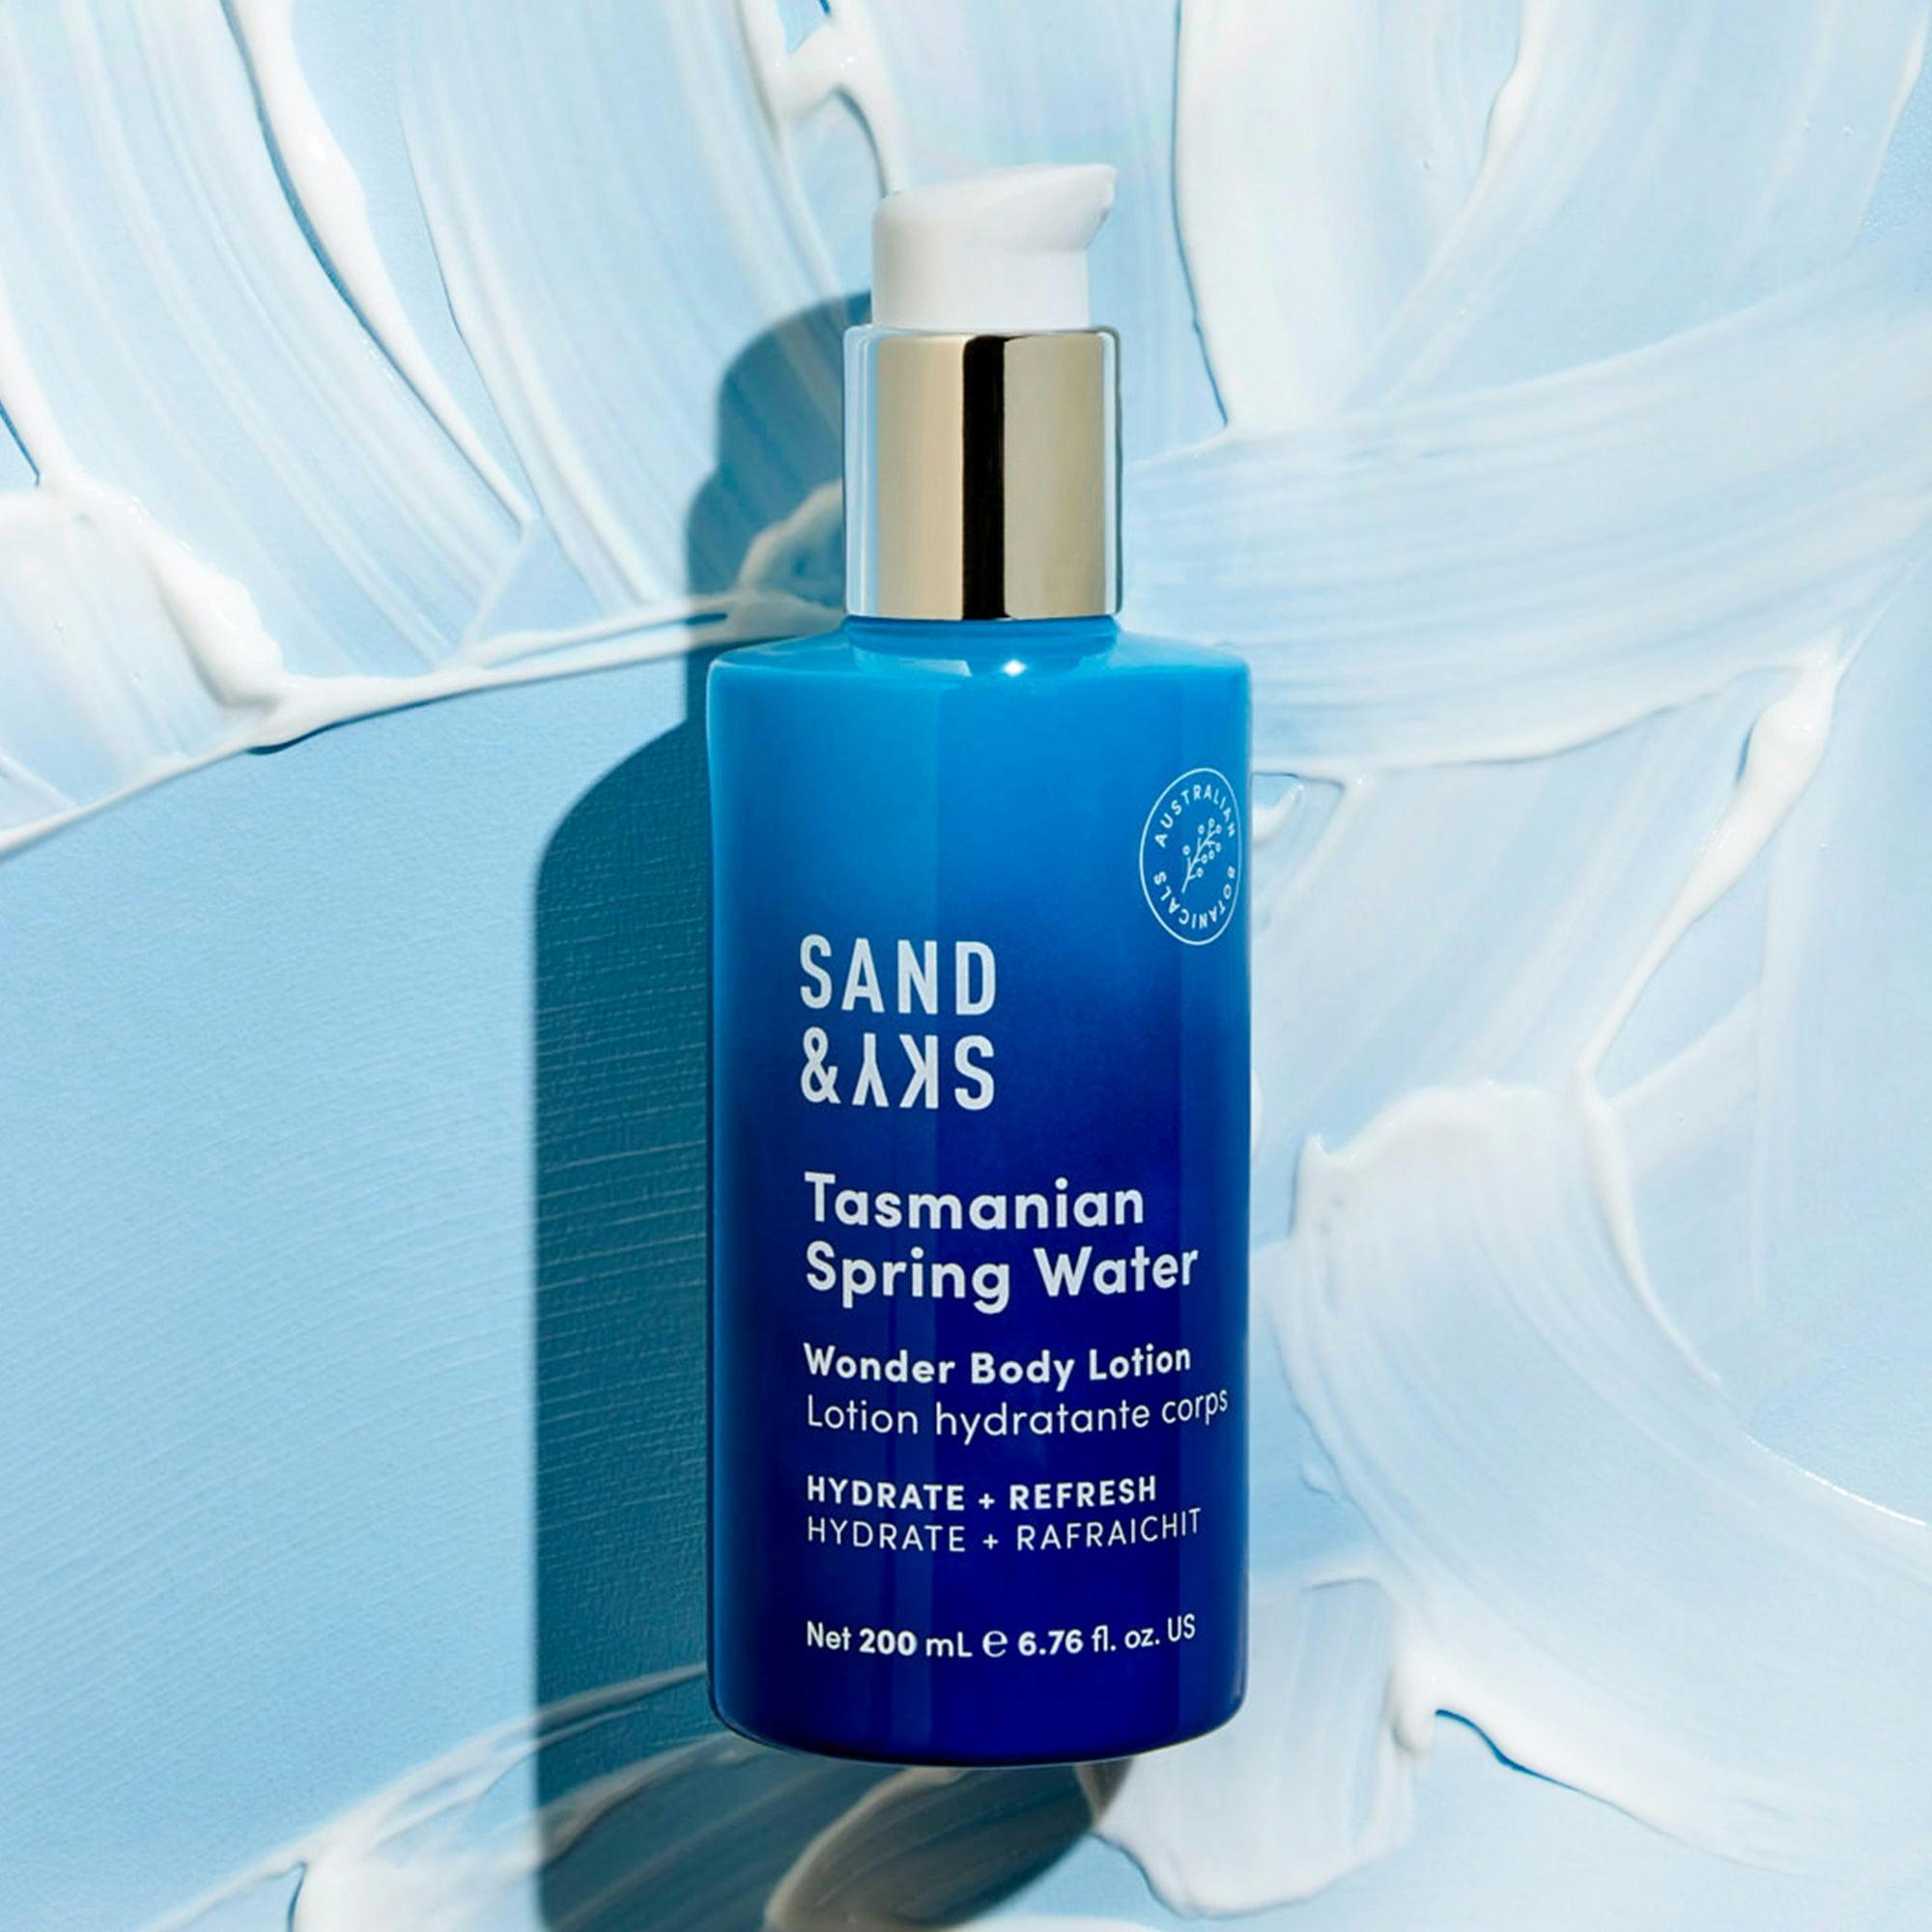 Sand & Sky Tasmanian Spring Water - Wonder Body Lotion 200ml